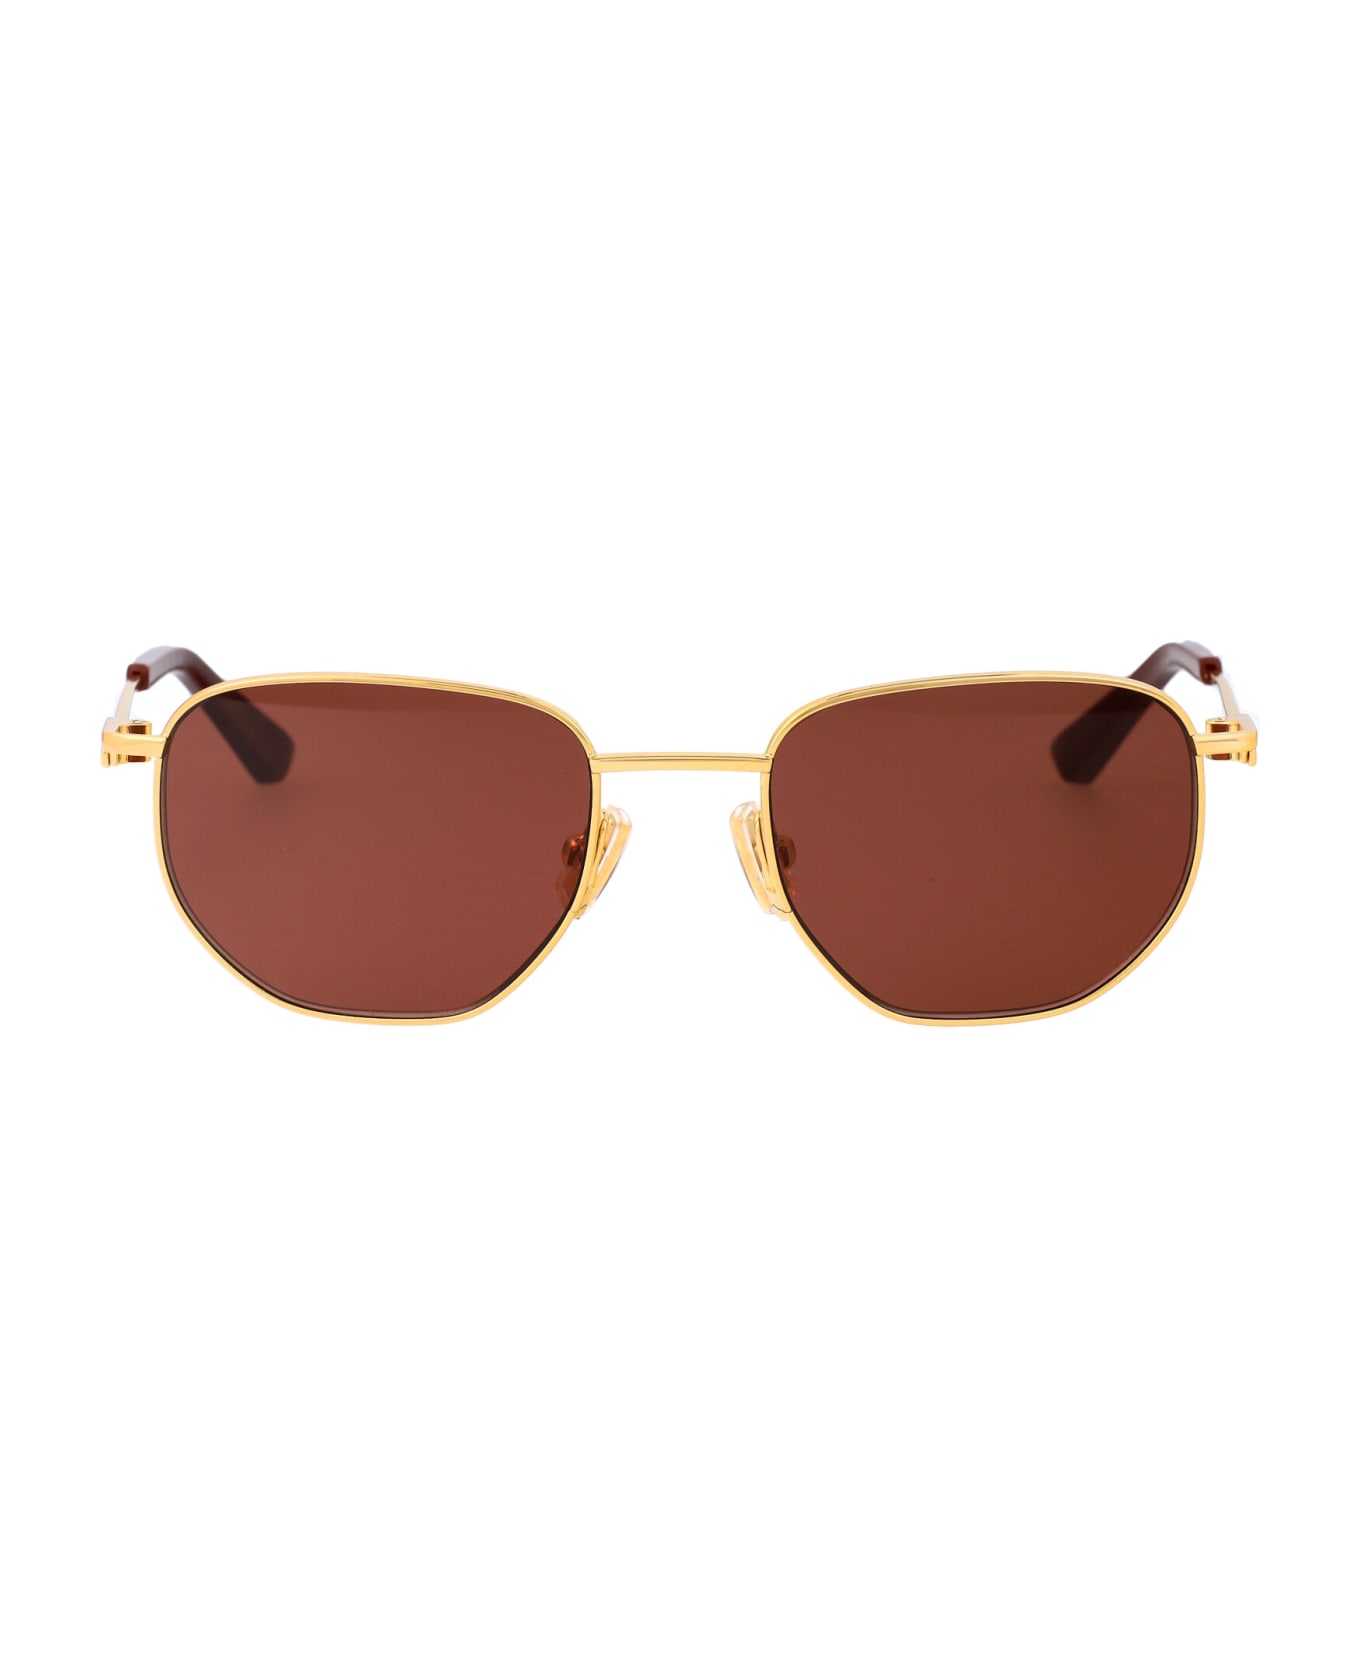 Bottega Veneta Eyewear Bv1301s Sunglasses - 003 GOLD GOLD BROWN